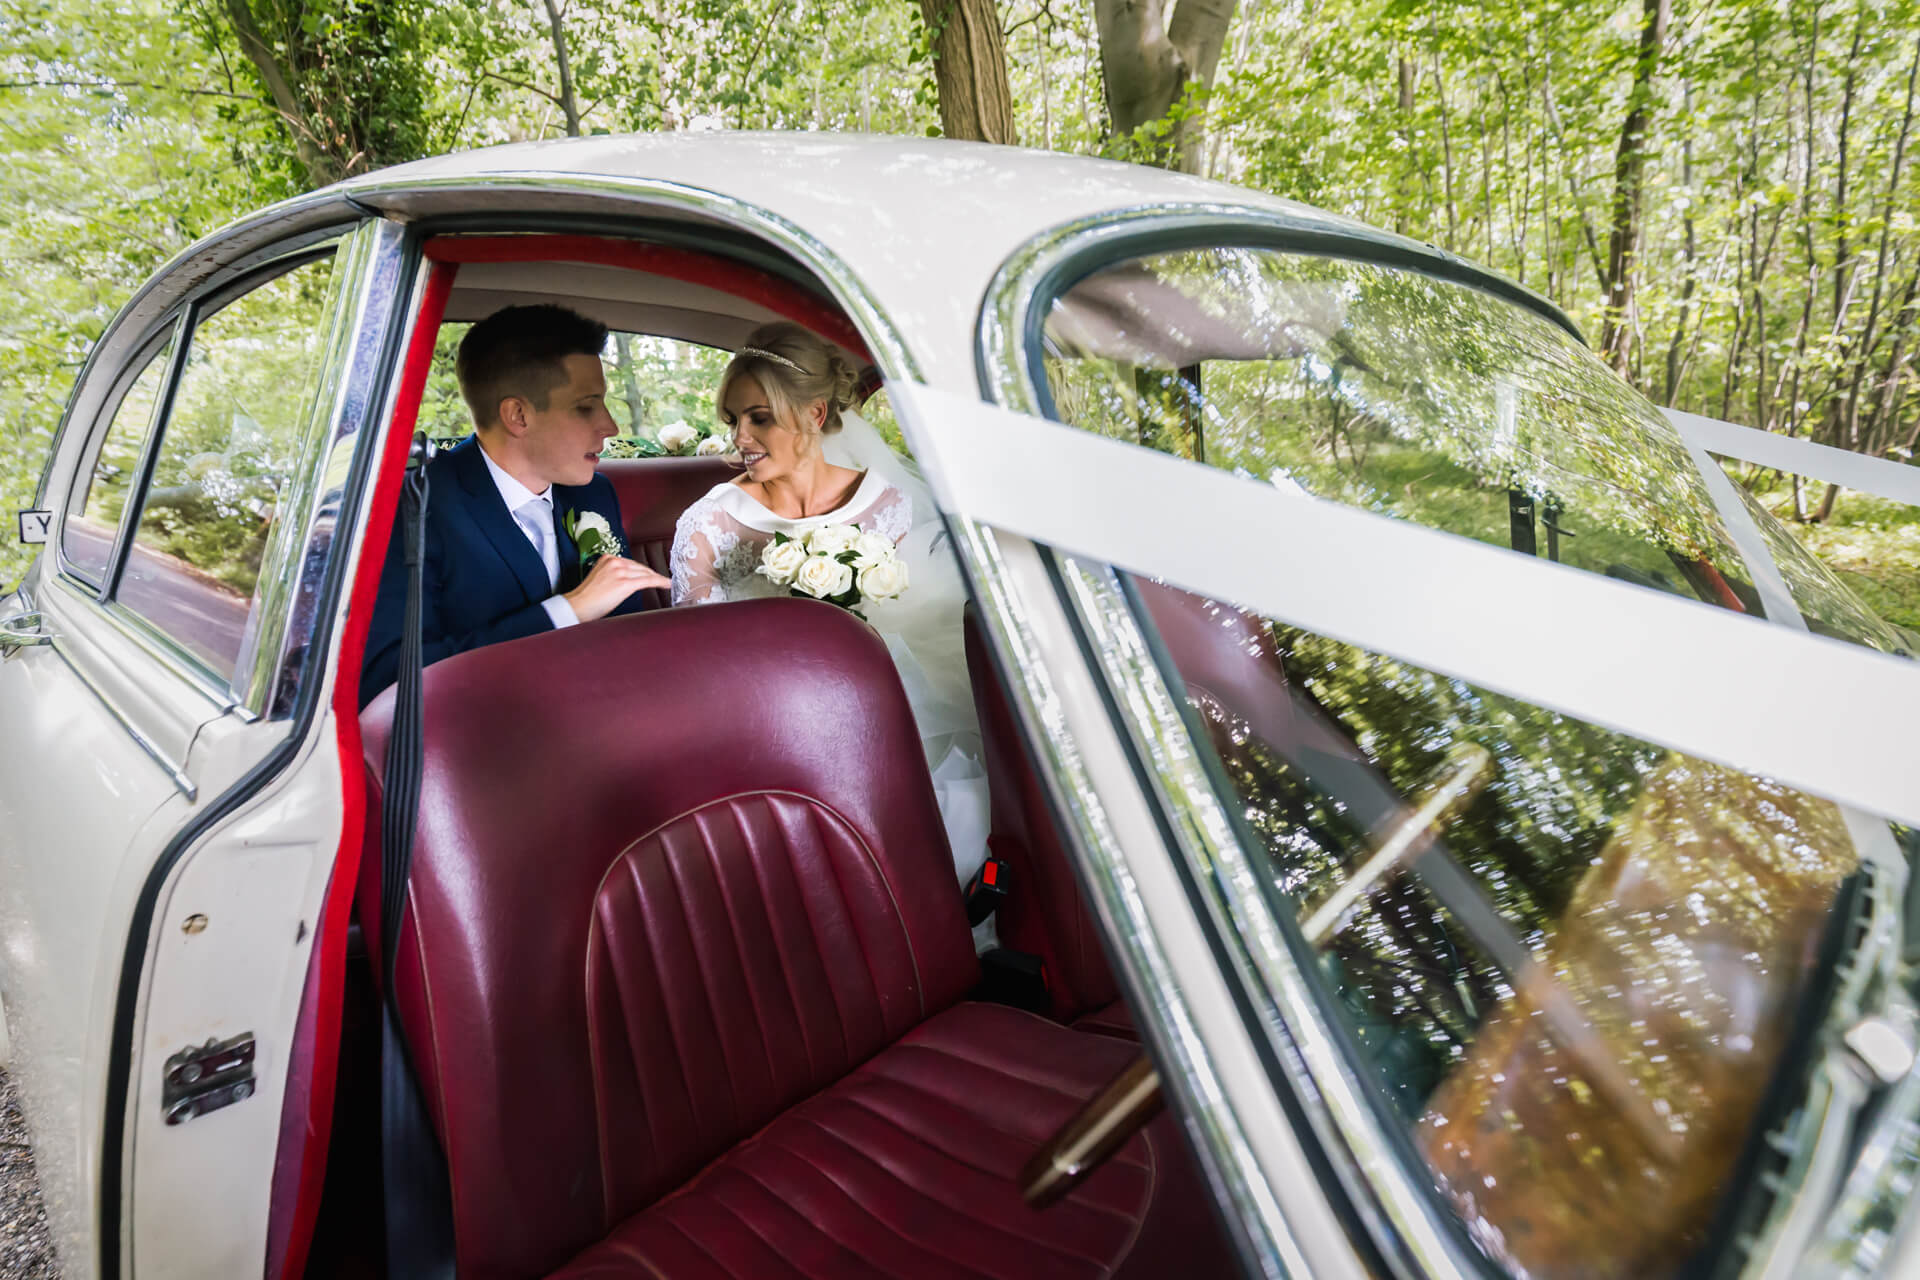 Wood Hall Hotel Wedding Photography - couple in the wedding car